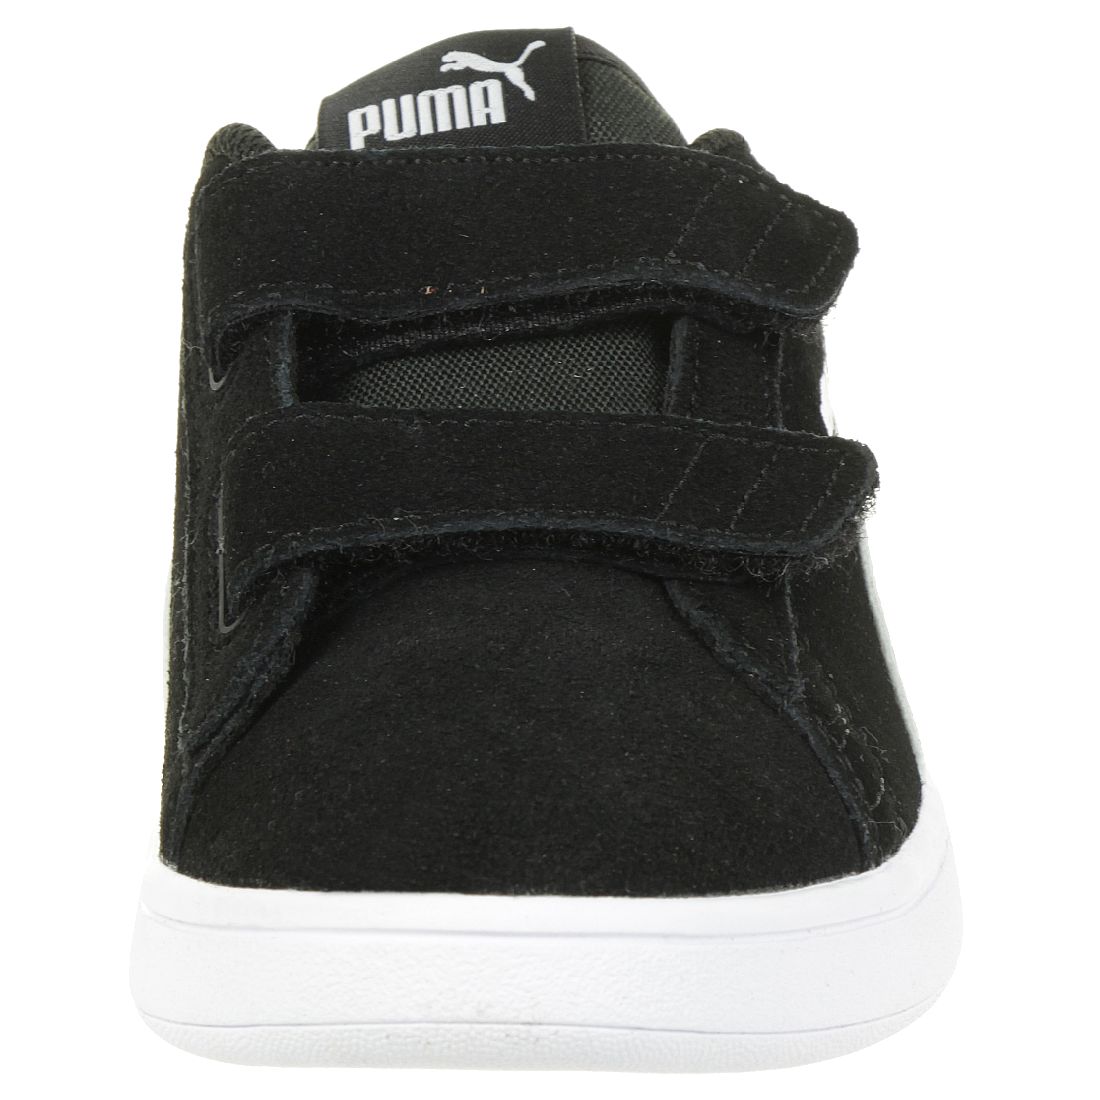 Puma Smash v2 SD V PS Kinder Sneaker 365177 01 schwarz